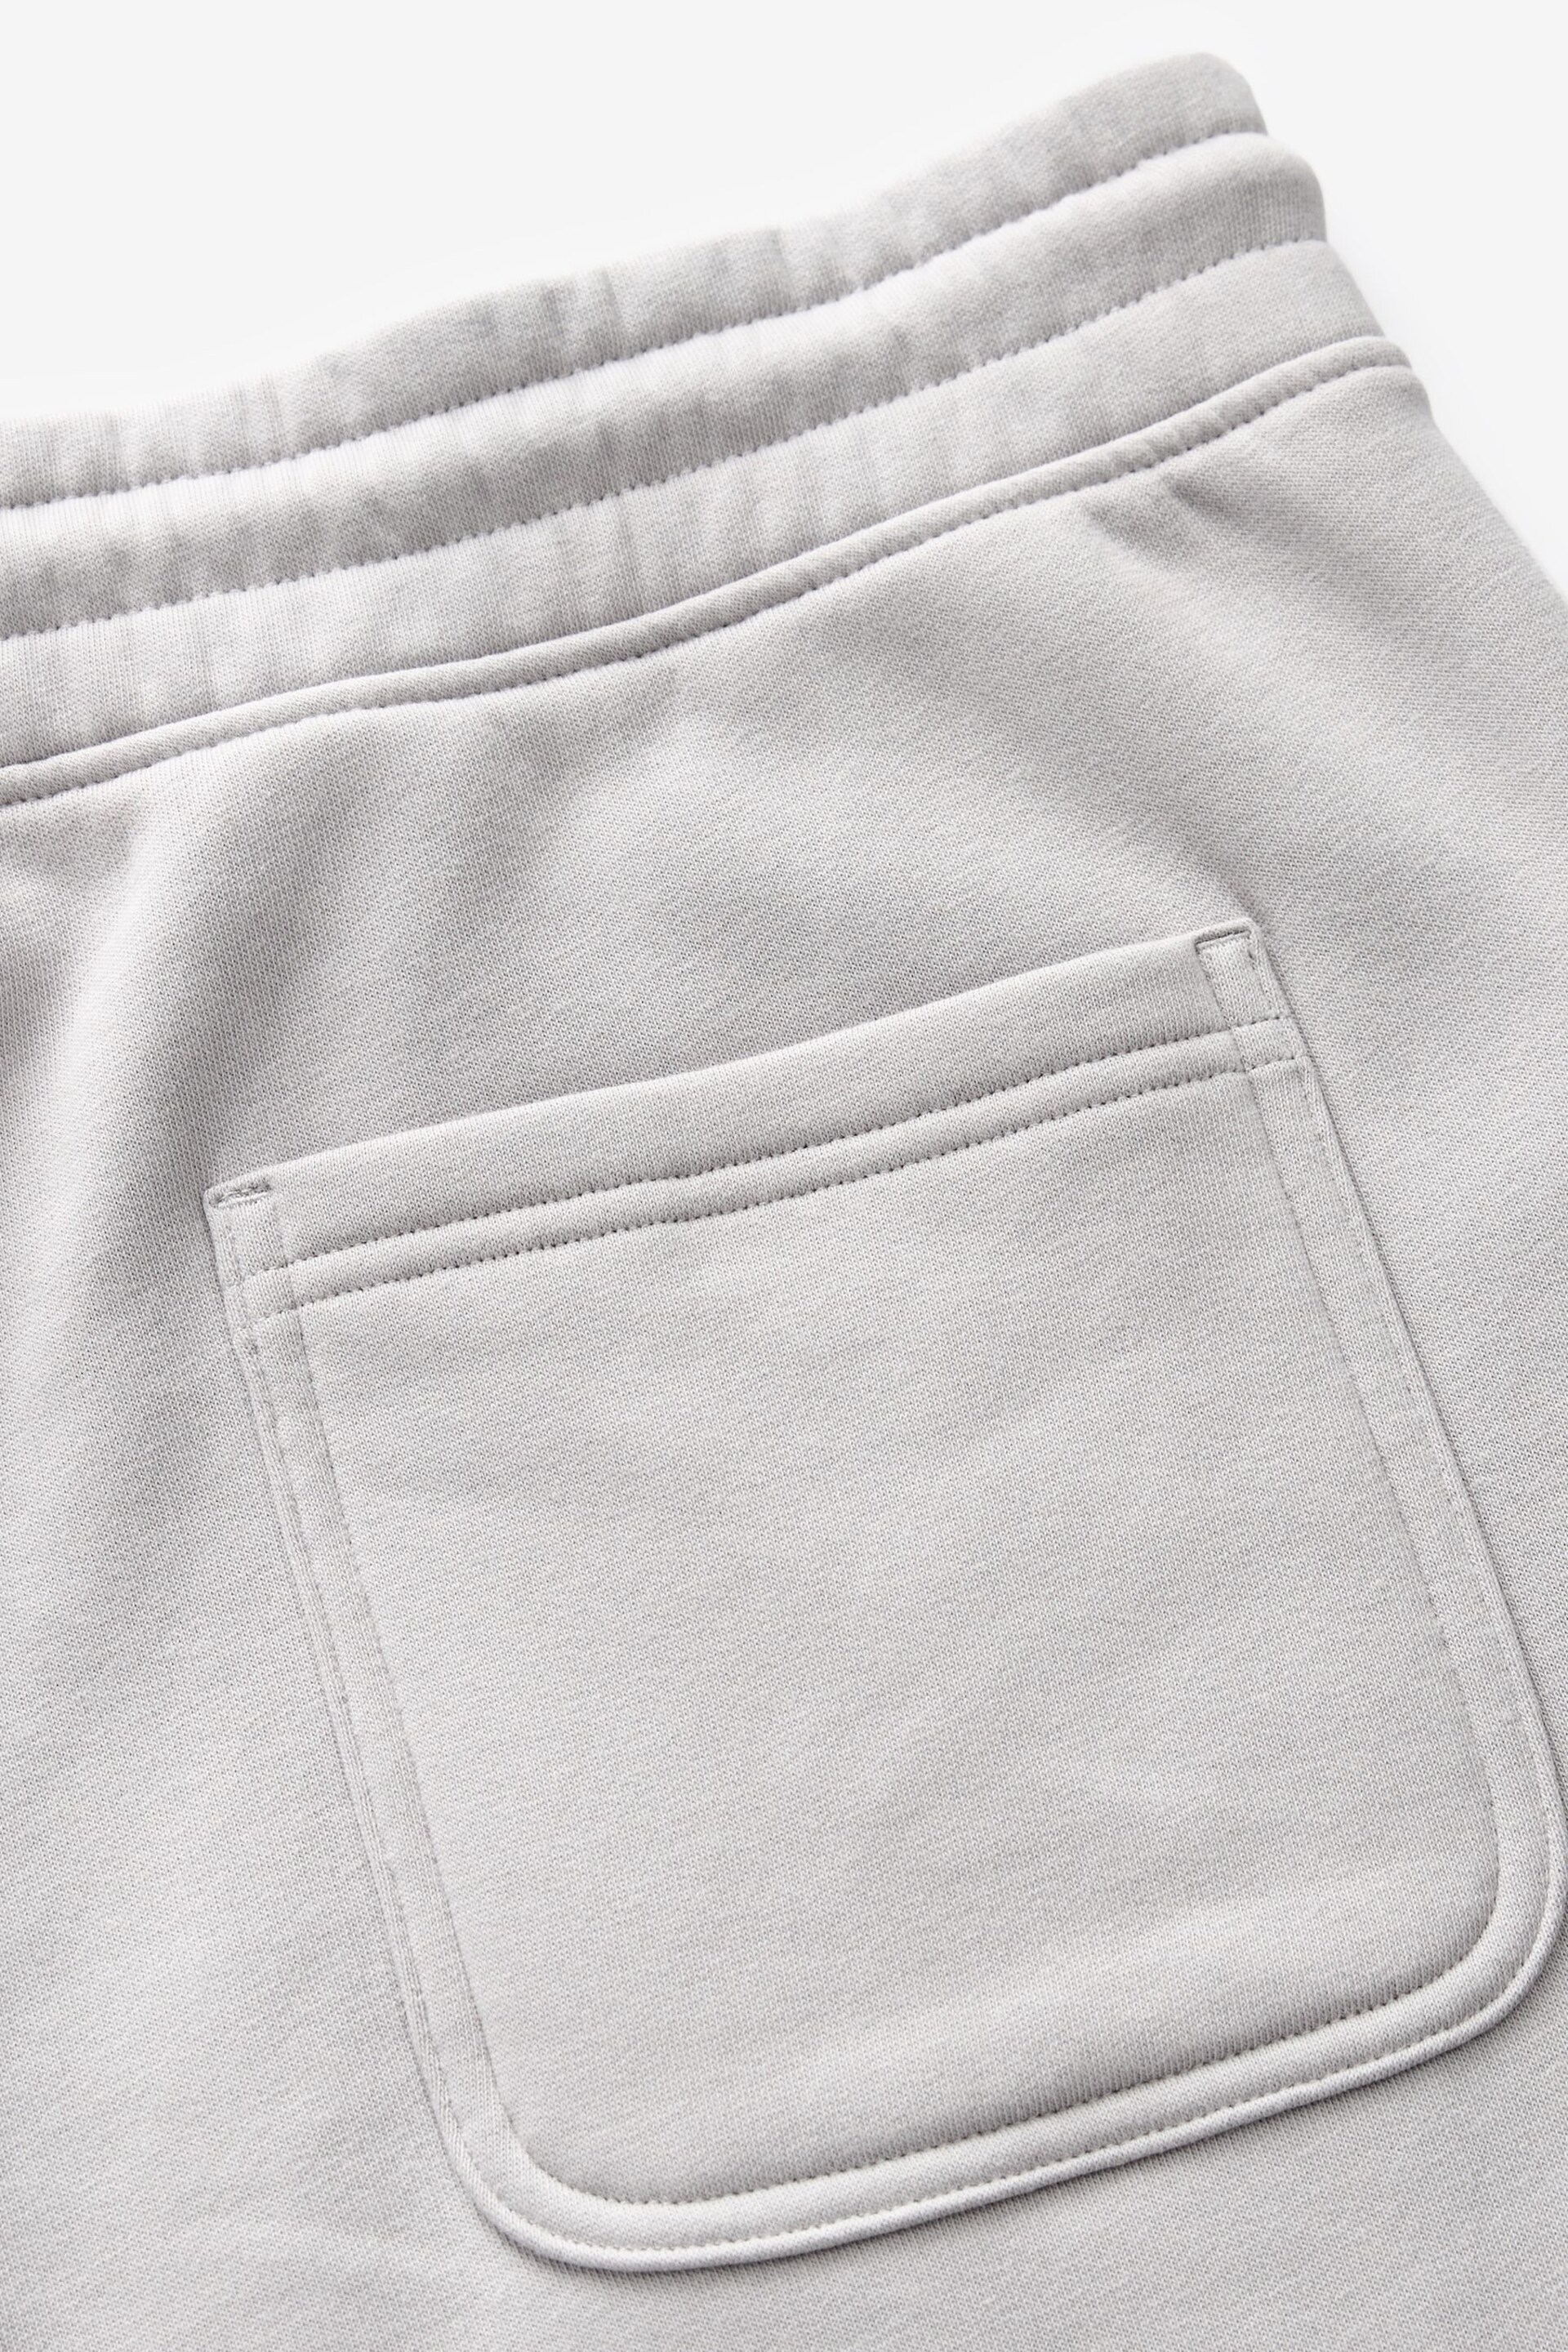 Light Grey Soft Fabric Jersey Shorts - Image 9 of 10